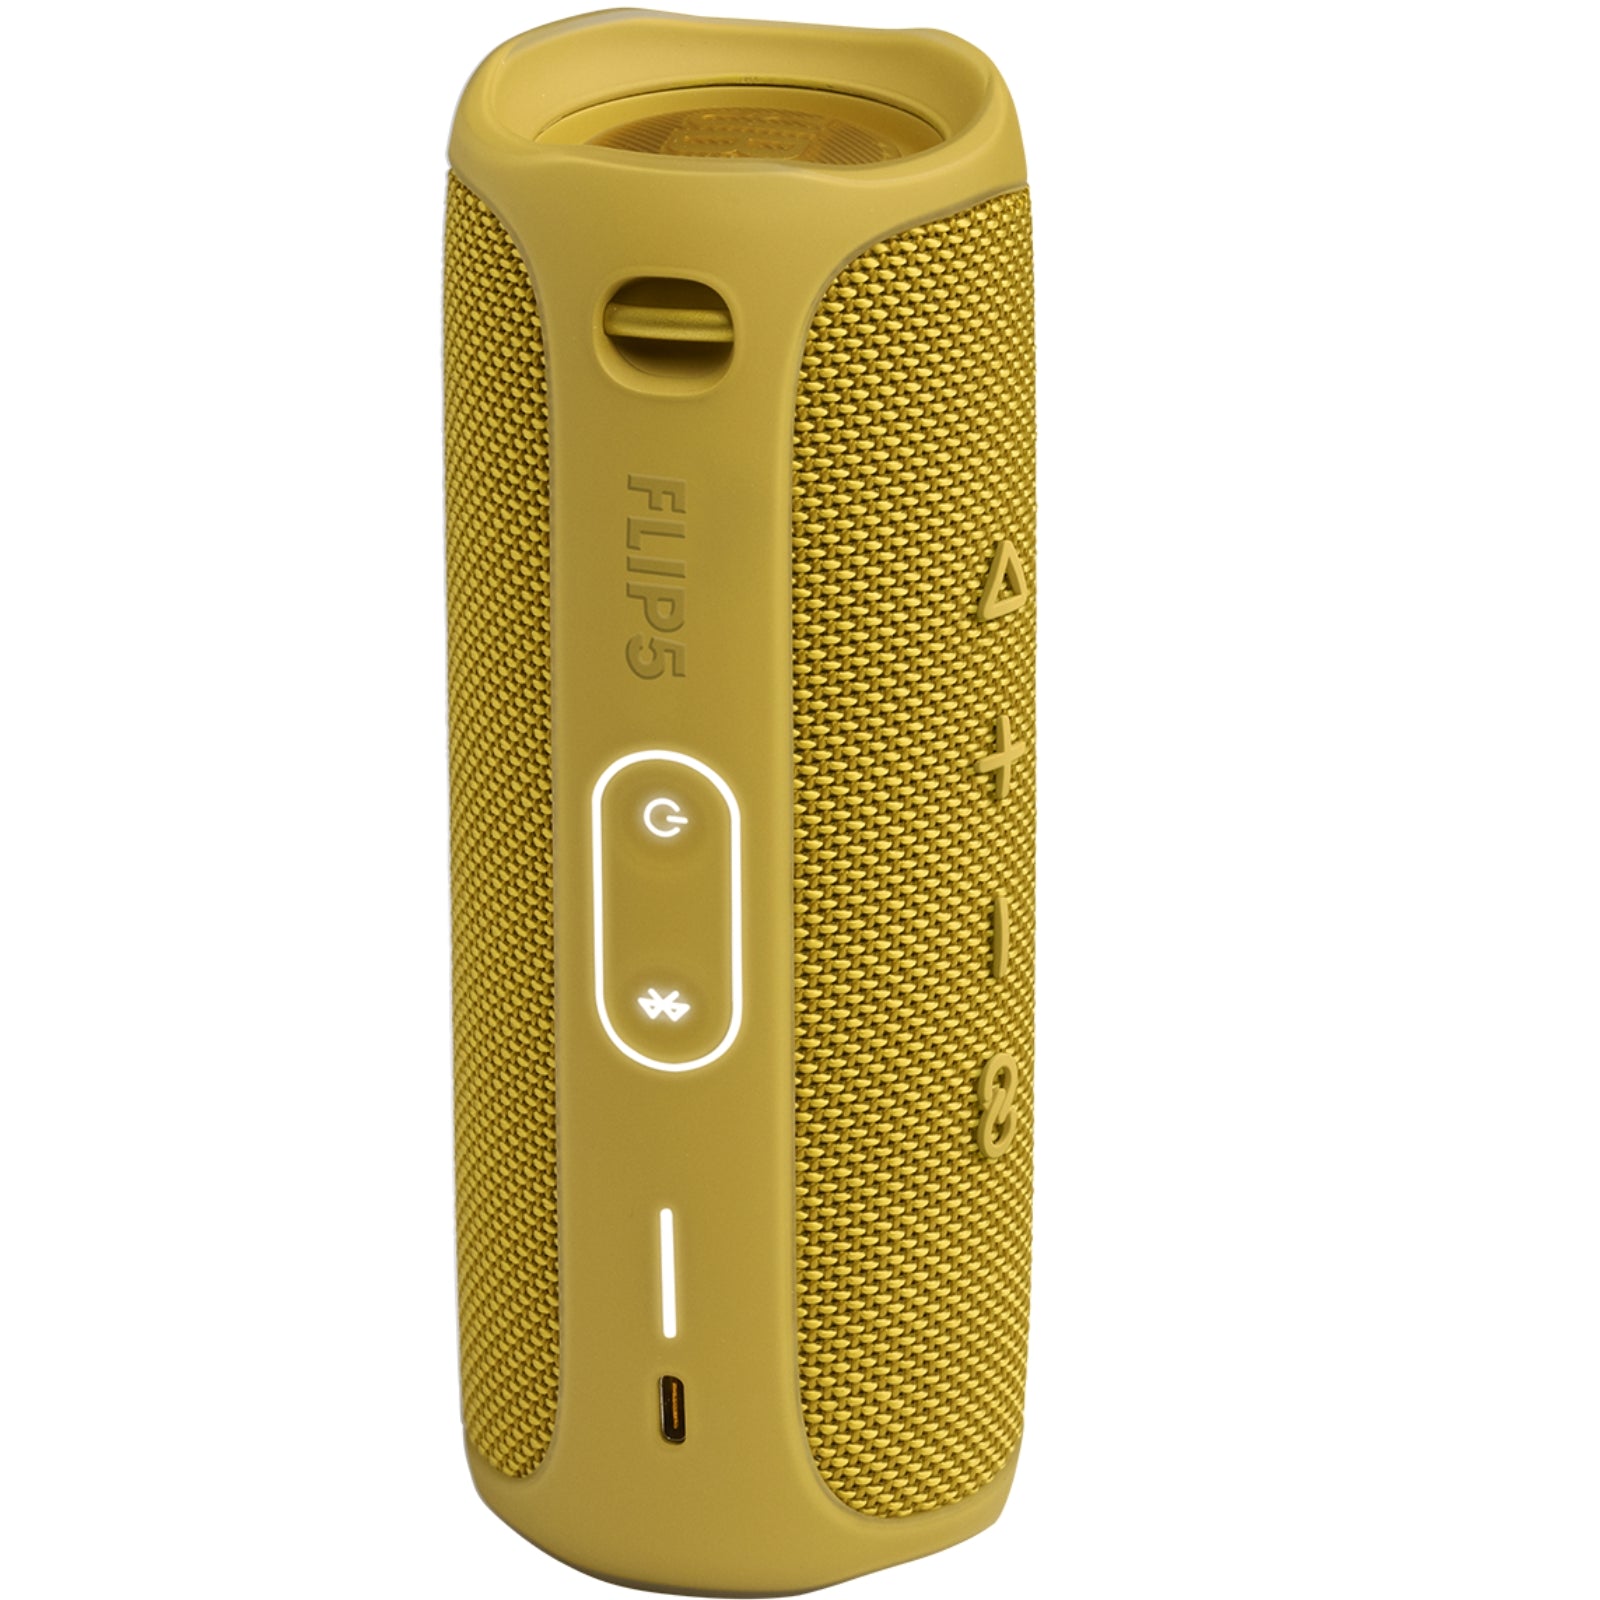 Jbl Flip 5 Bluetooth Speaker Yellow - MyMobile